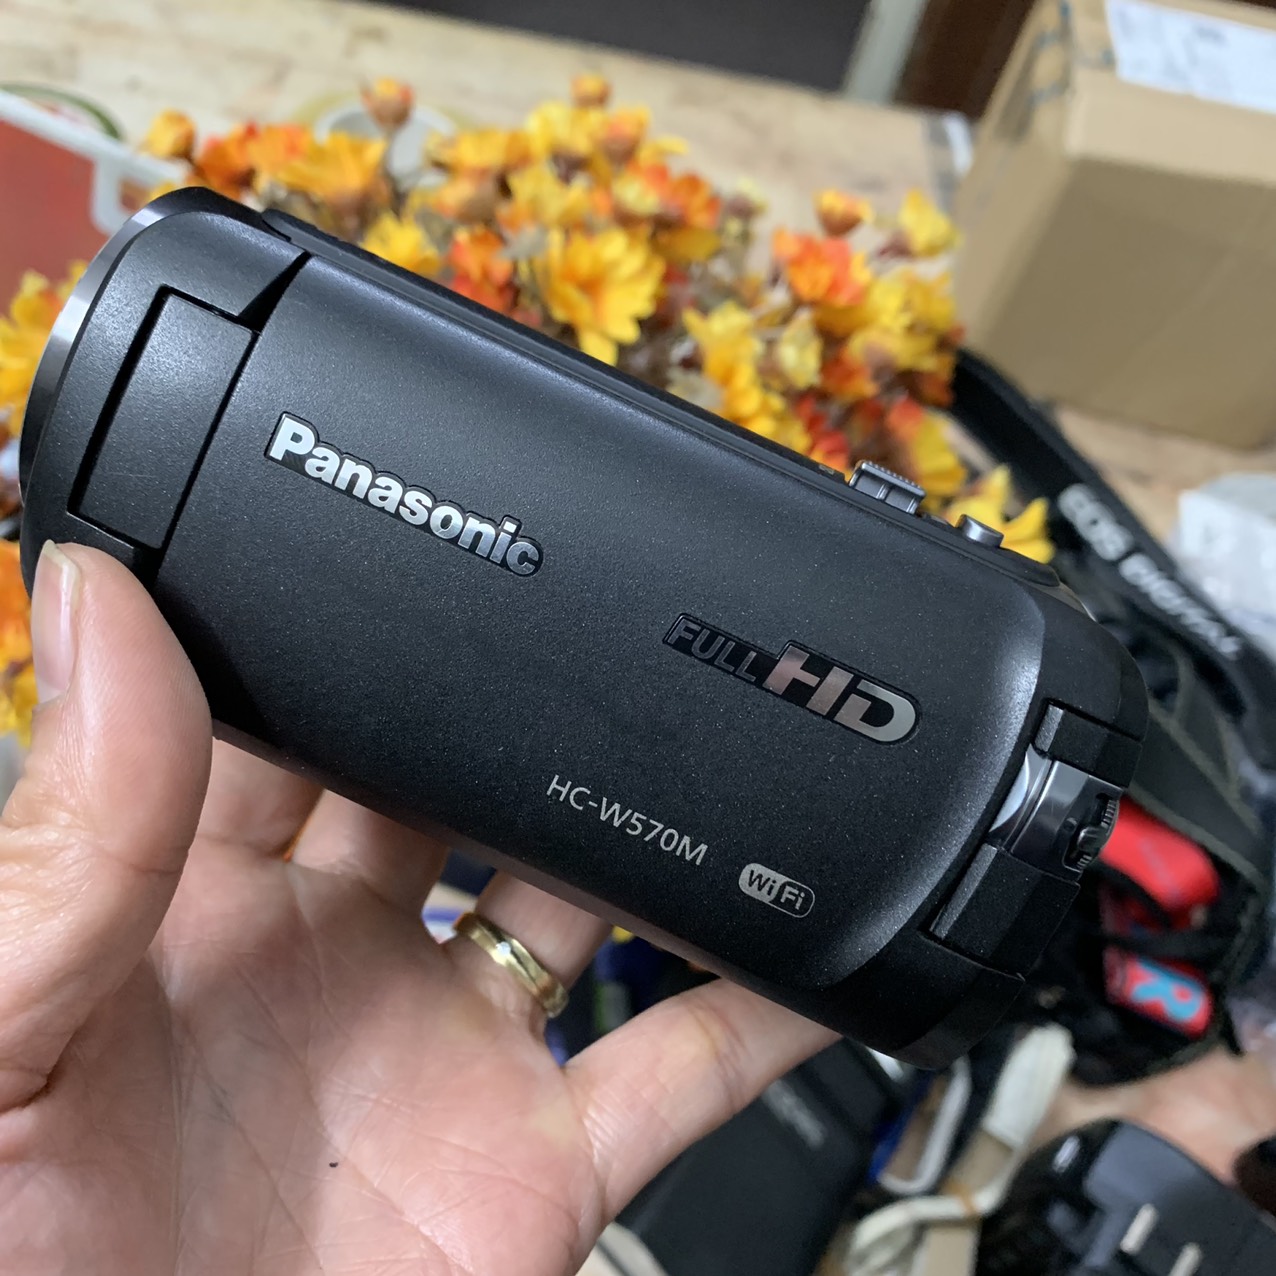 Máy quay phim Panasonic HC-W570M 2 cam